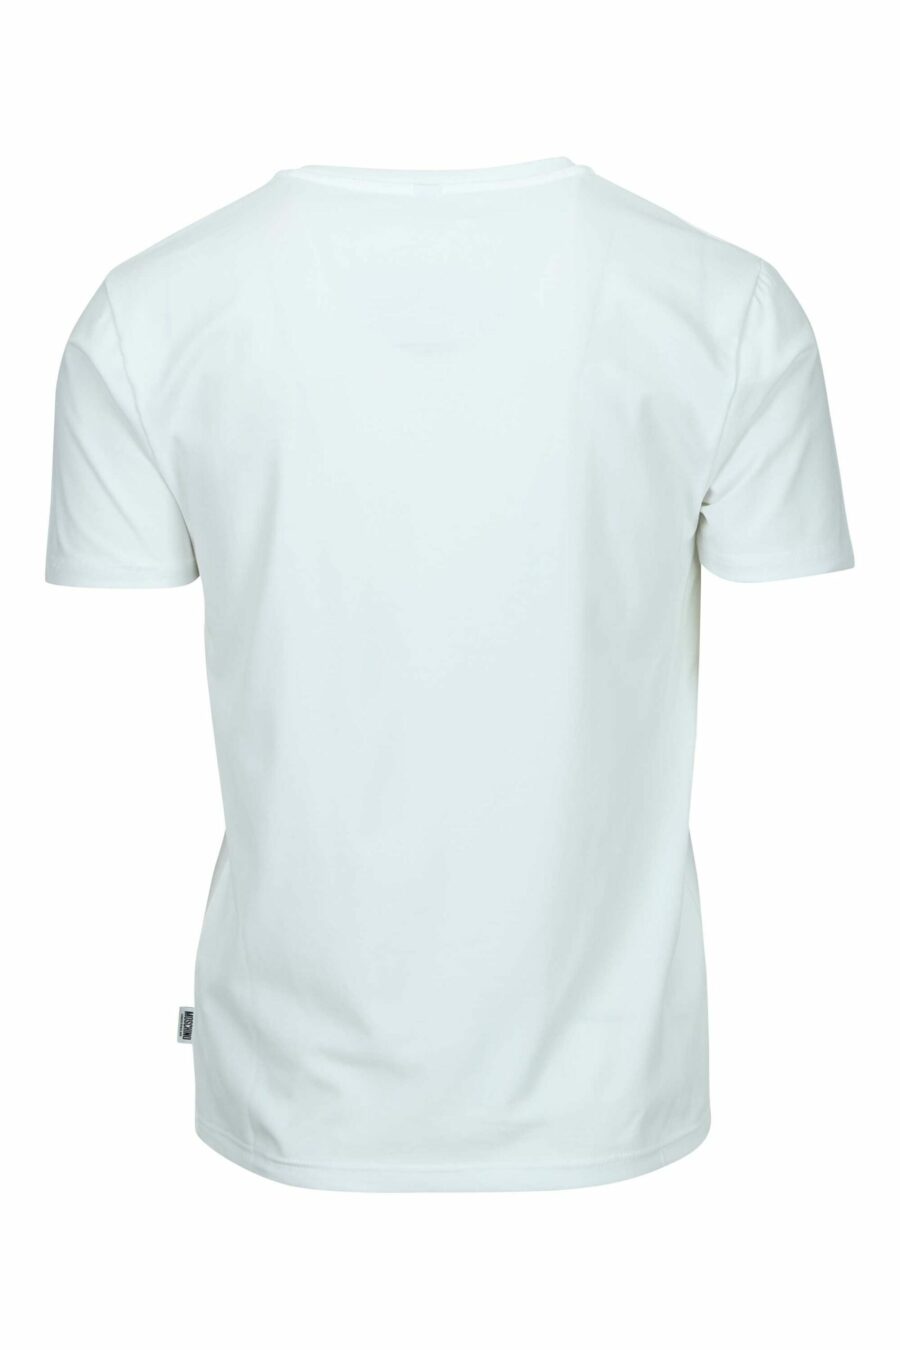 Camiseta blanca con minilogo parche oso "underbear" - 667113605678 1 scaled